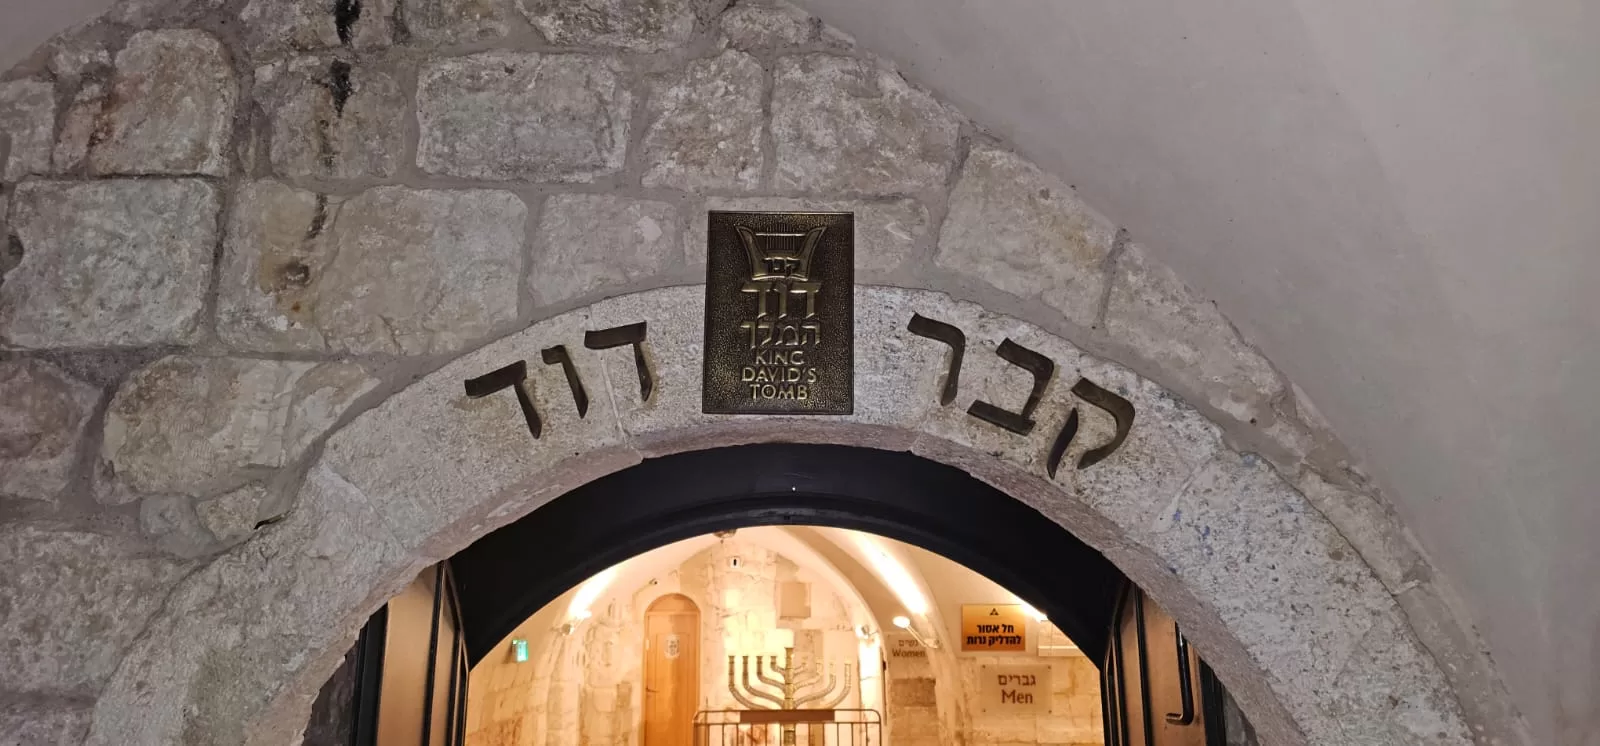 Entrance to King David's Tomb (Kever David HaMelech)